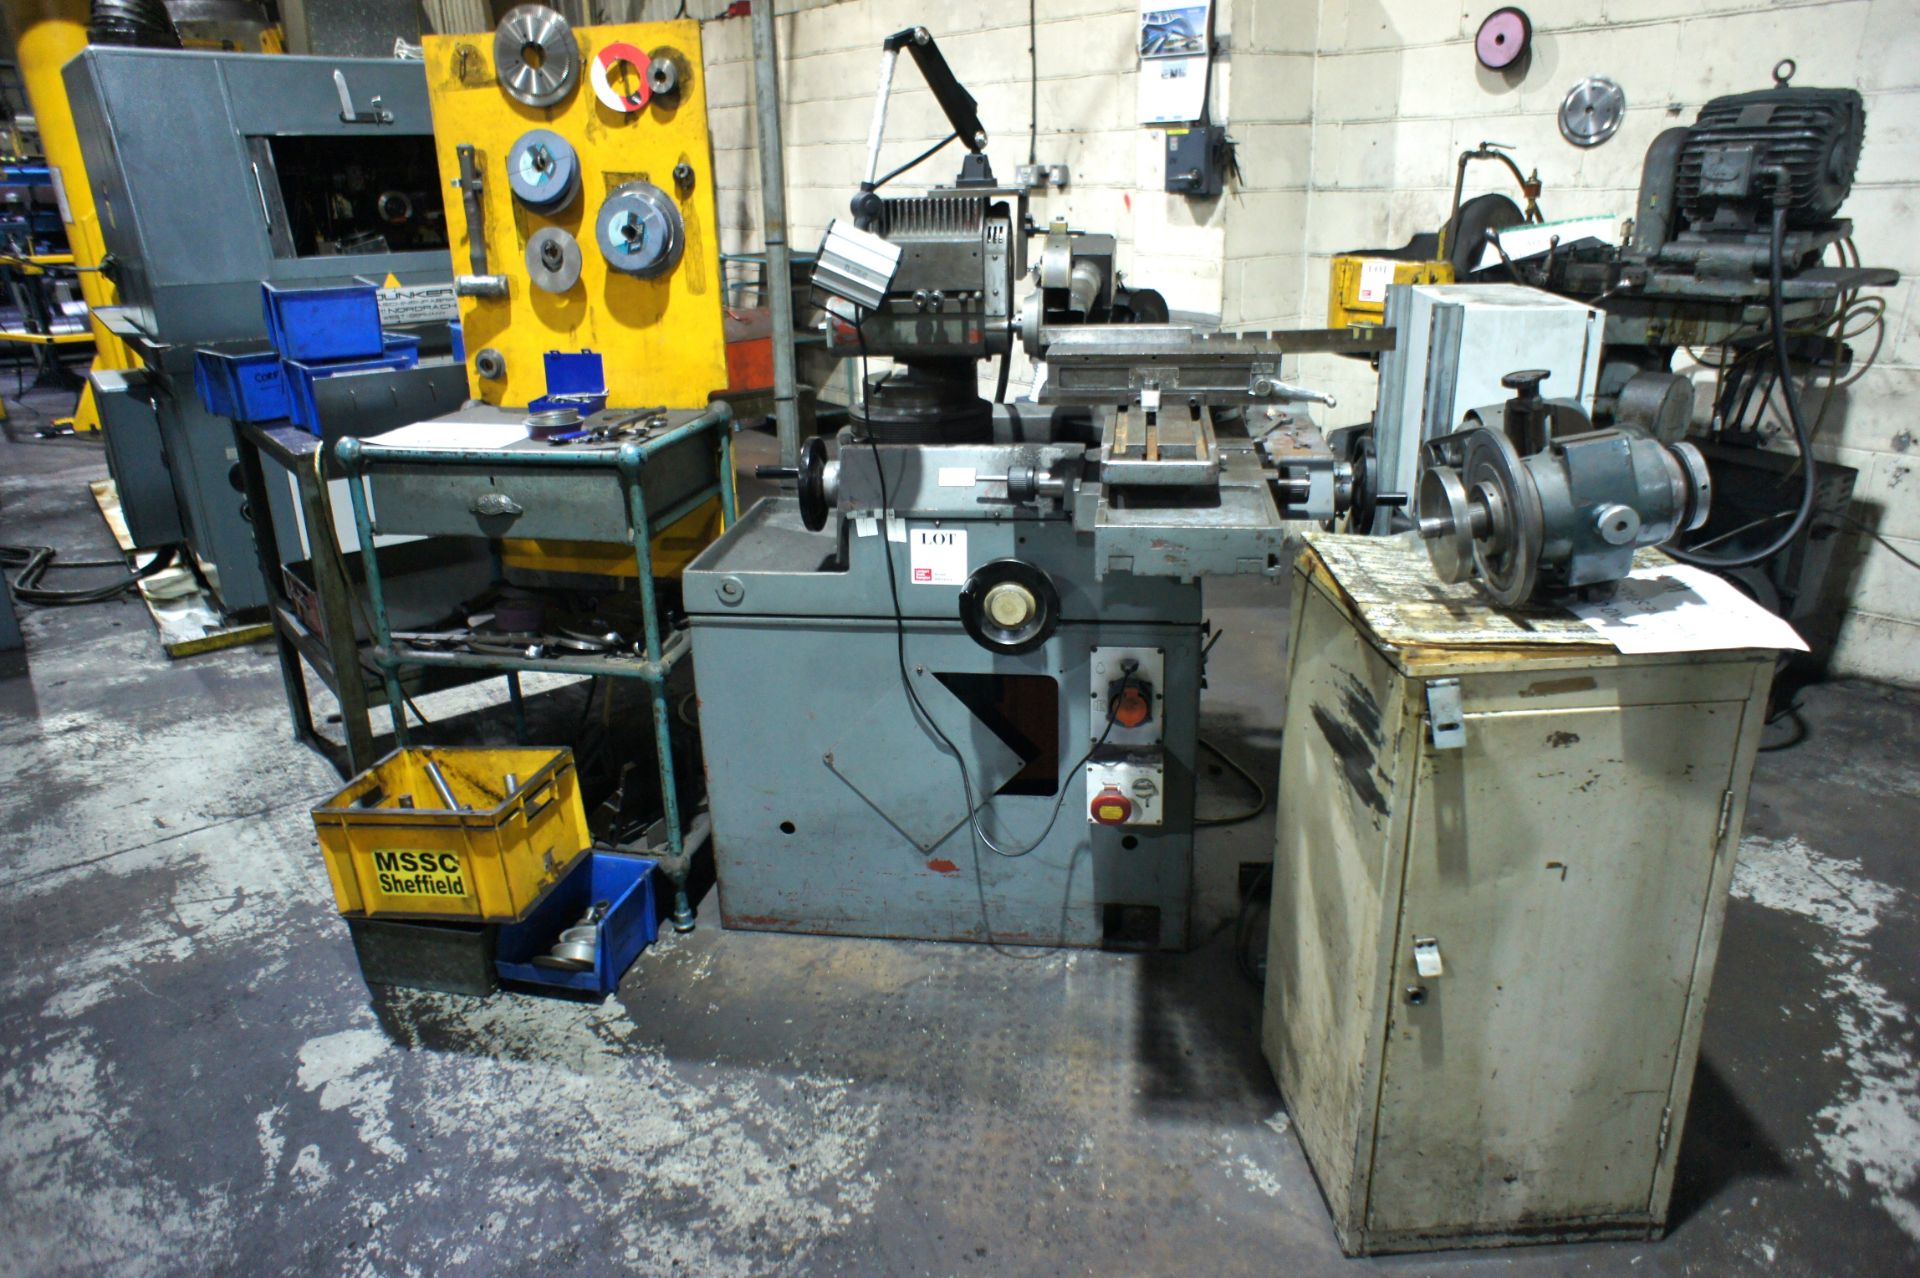 Cincinnati Milacron 2AB tool and cutter grinder